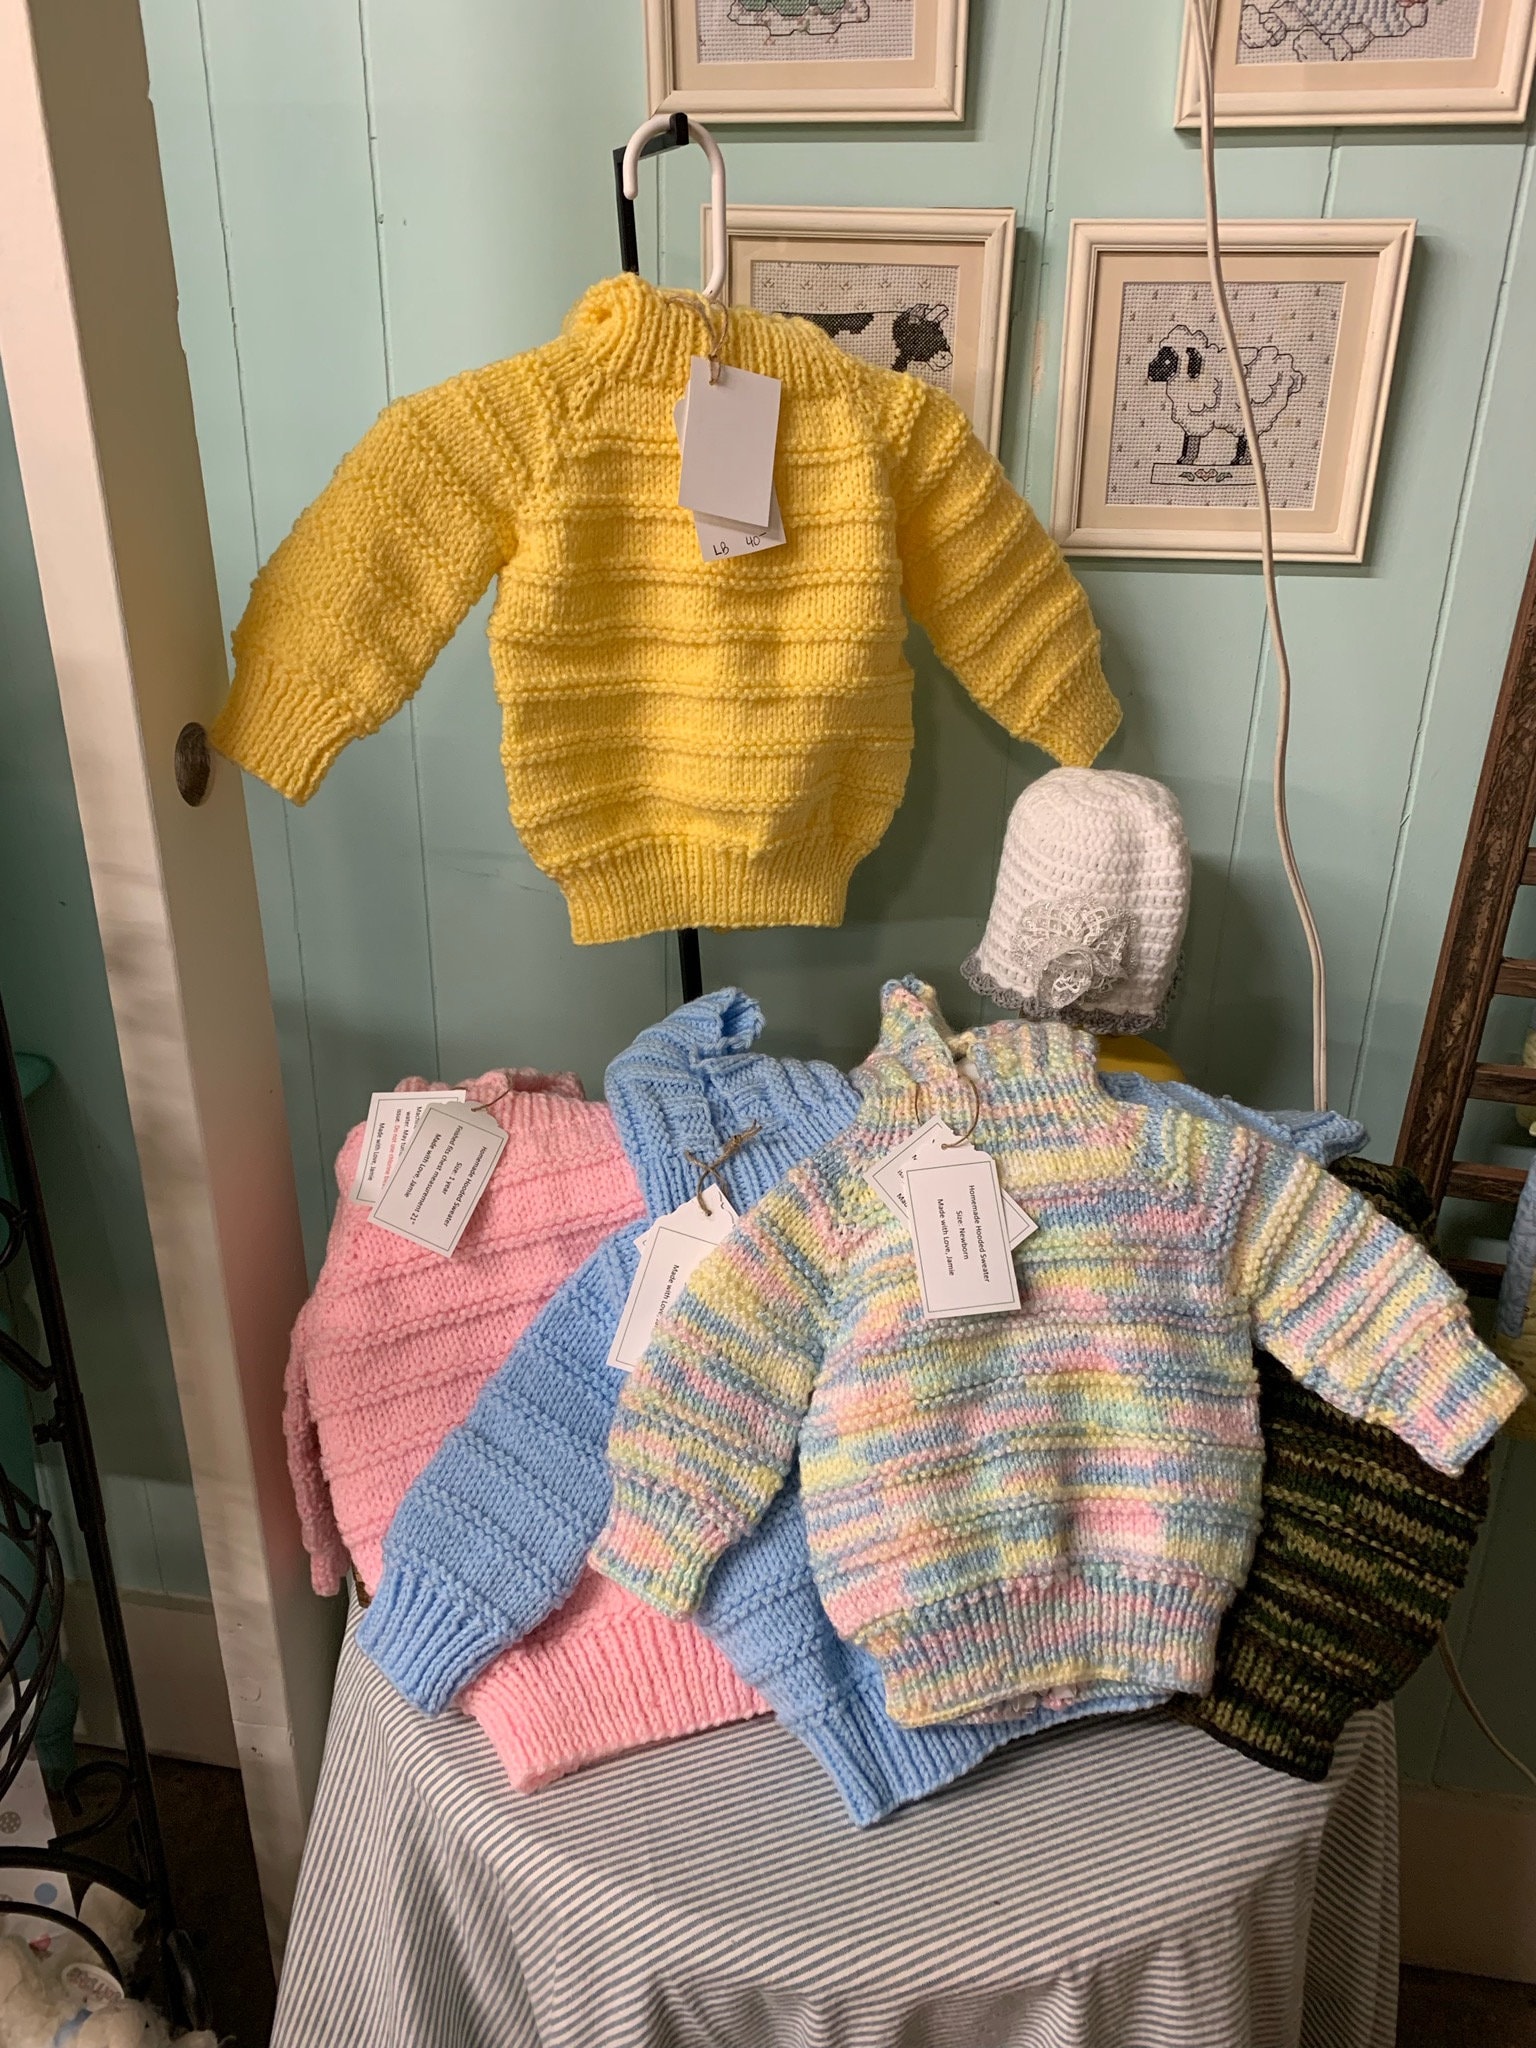 Baby Boys Monogram Sweater Light Blue Crewneck Knitted, 9-12M